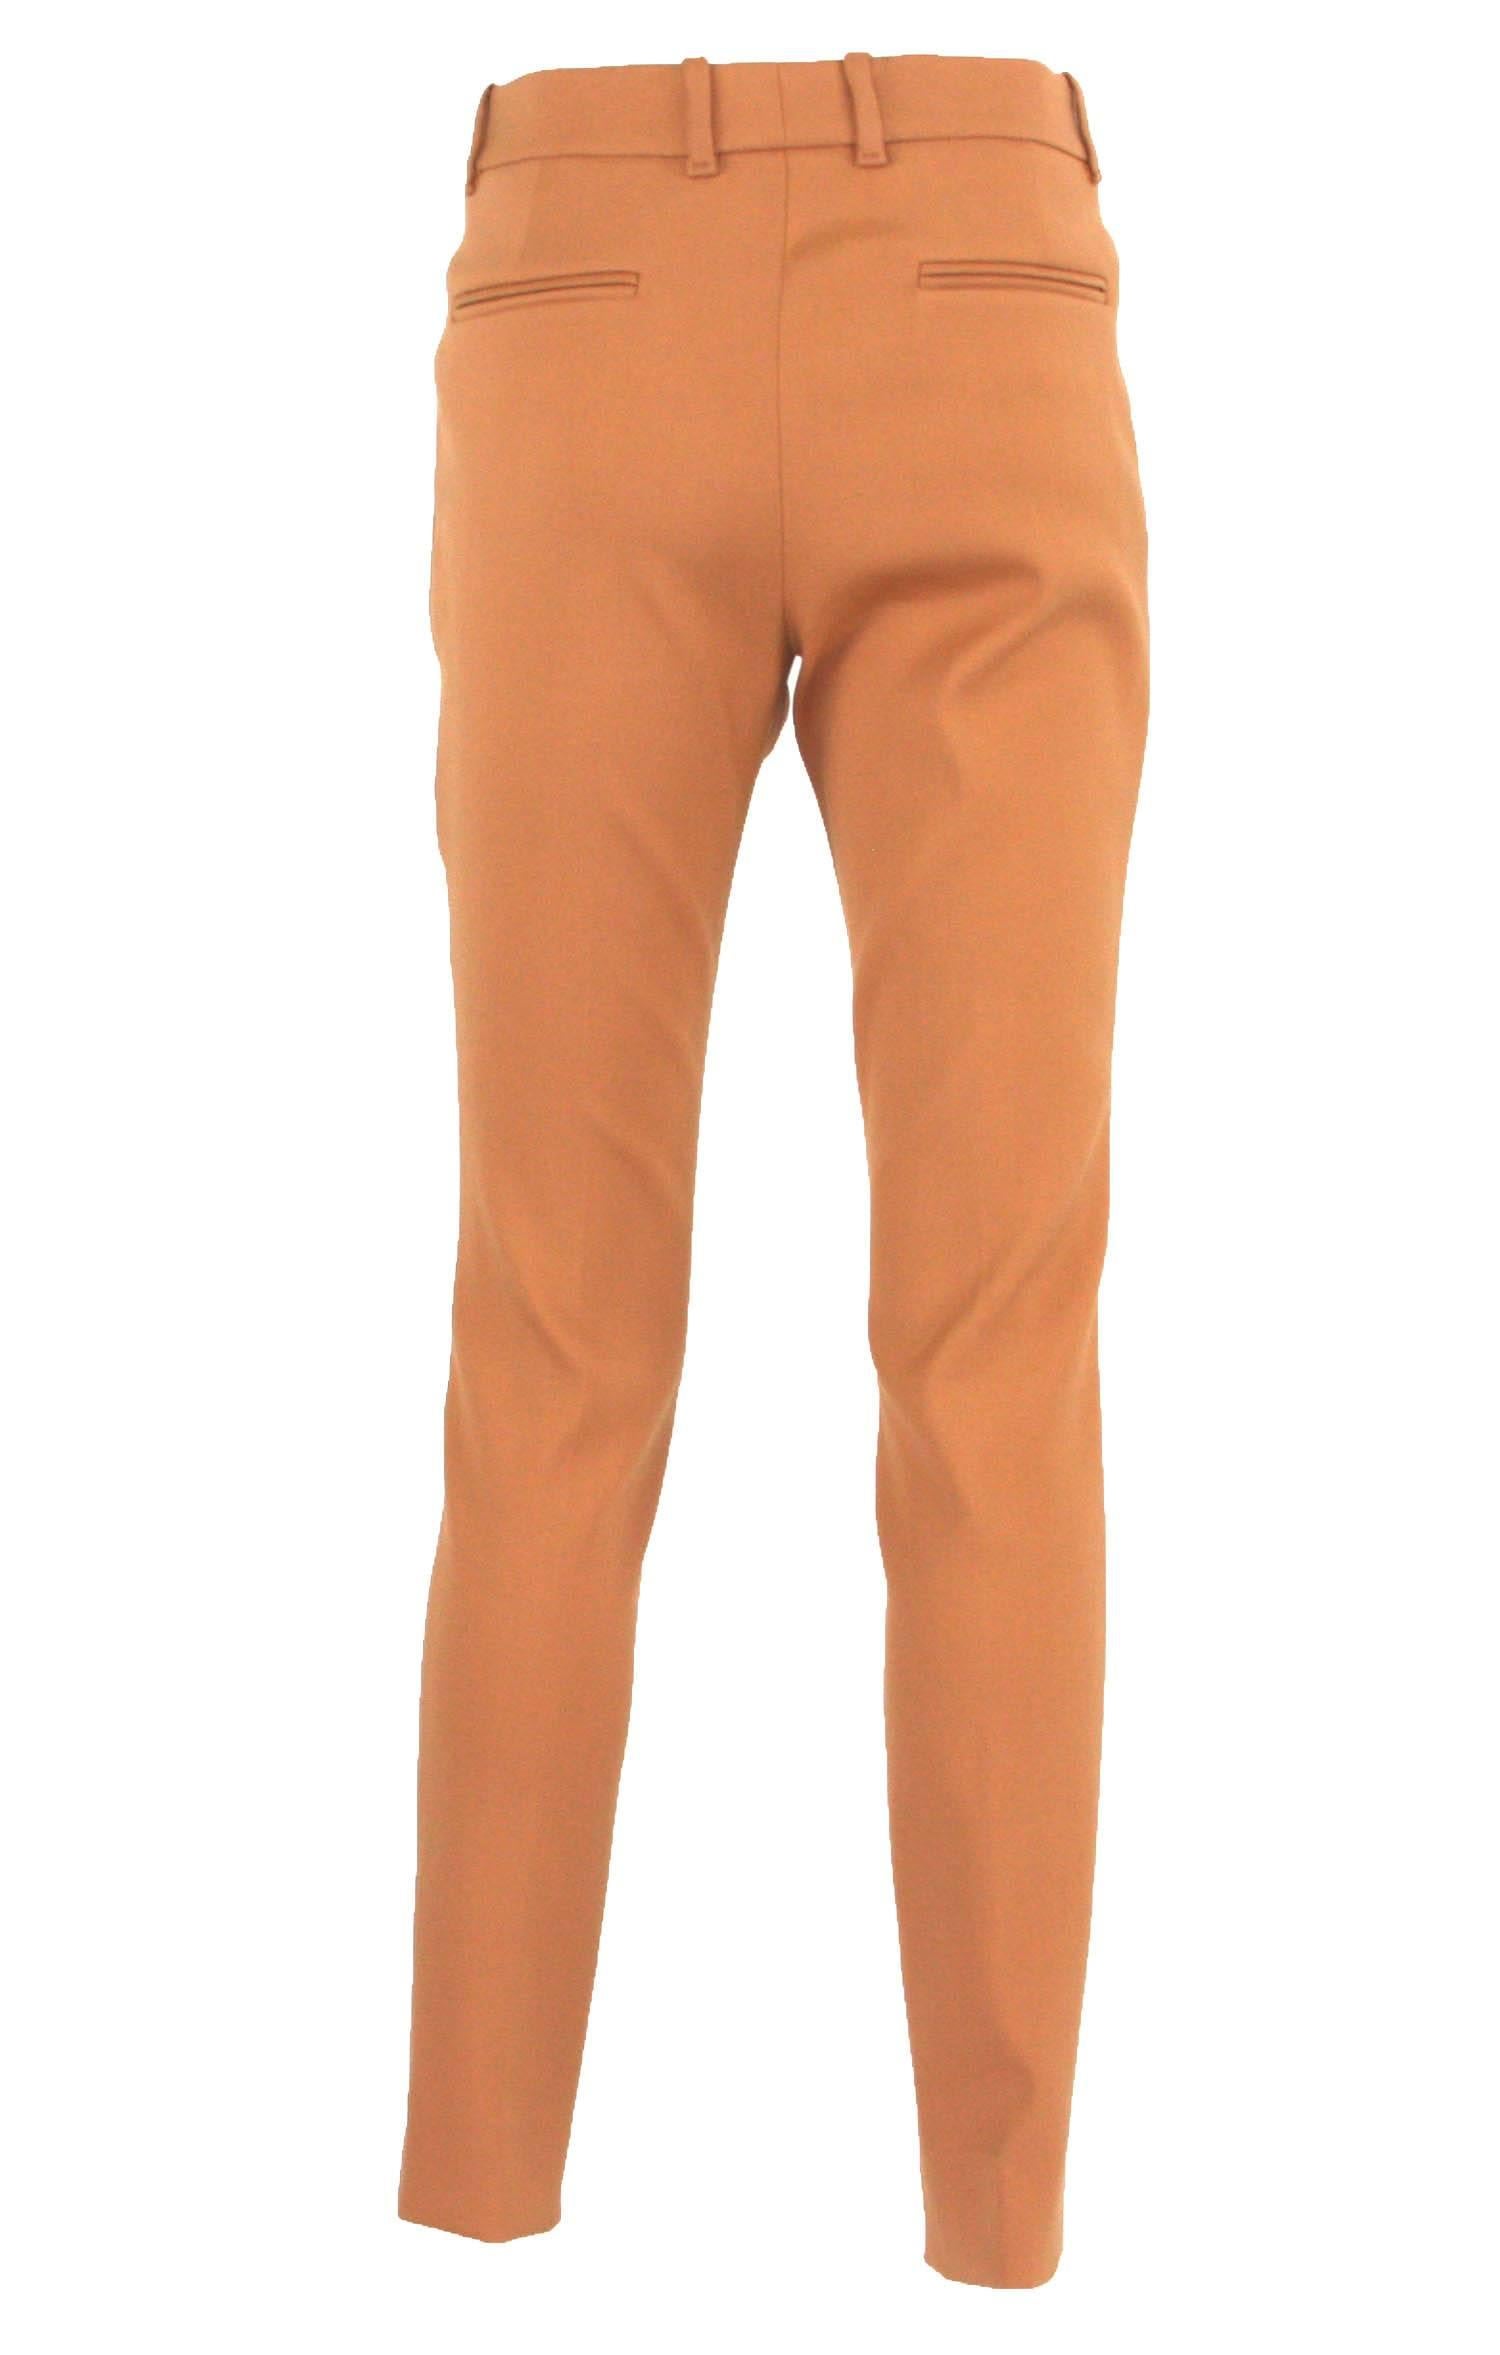 Women's New Gucci Salmon Pant Suit Silk Blouse Stretch Slim Pants Leather Belt 40 - 4/6 For Sale